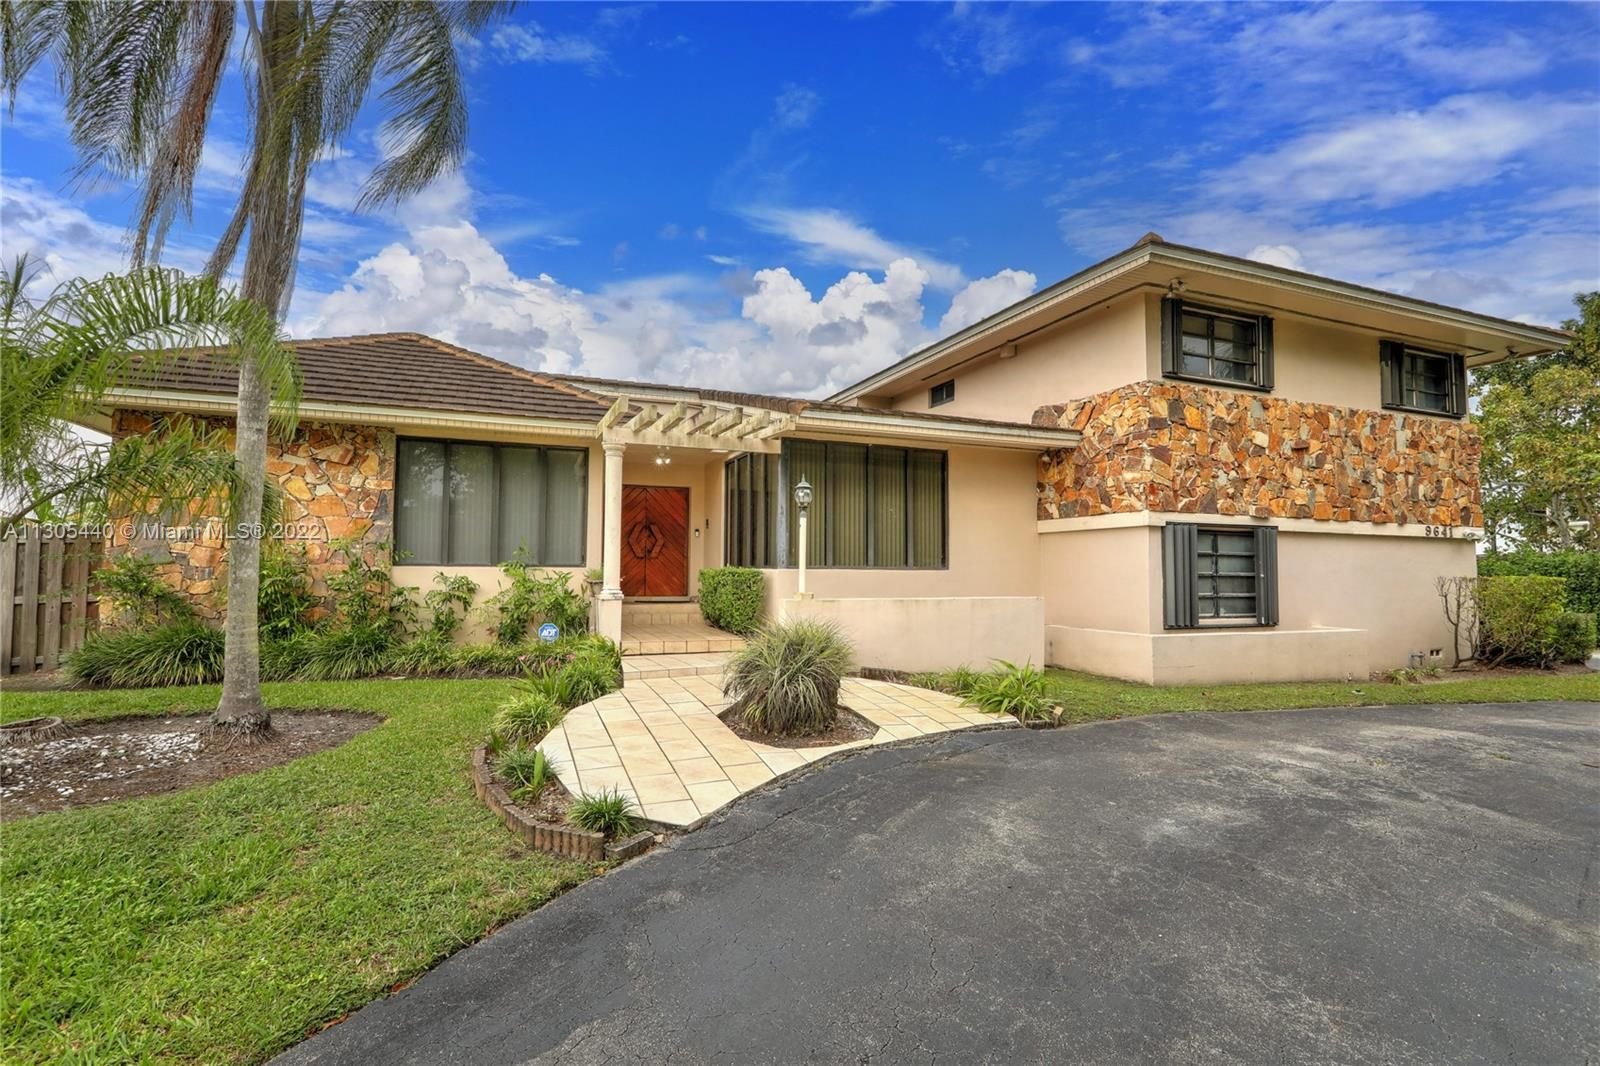 Real estate property located at 9641 Calusa Club Dr, Miami-Dade County, Miami, FL